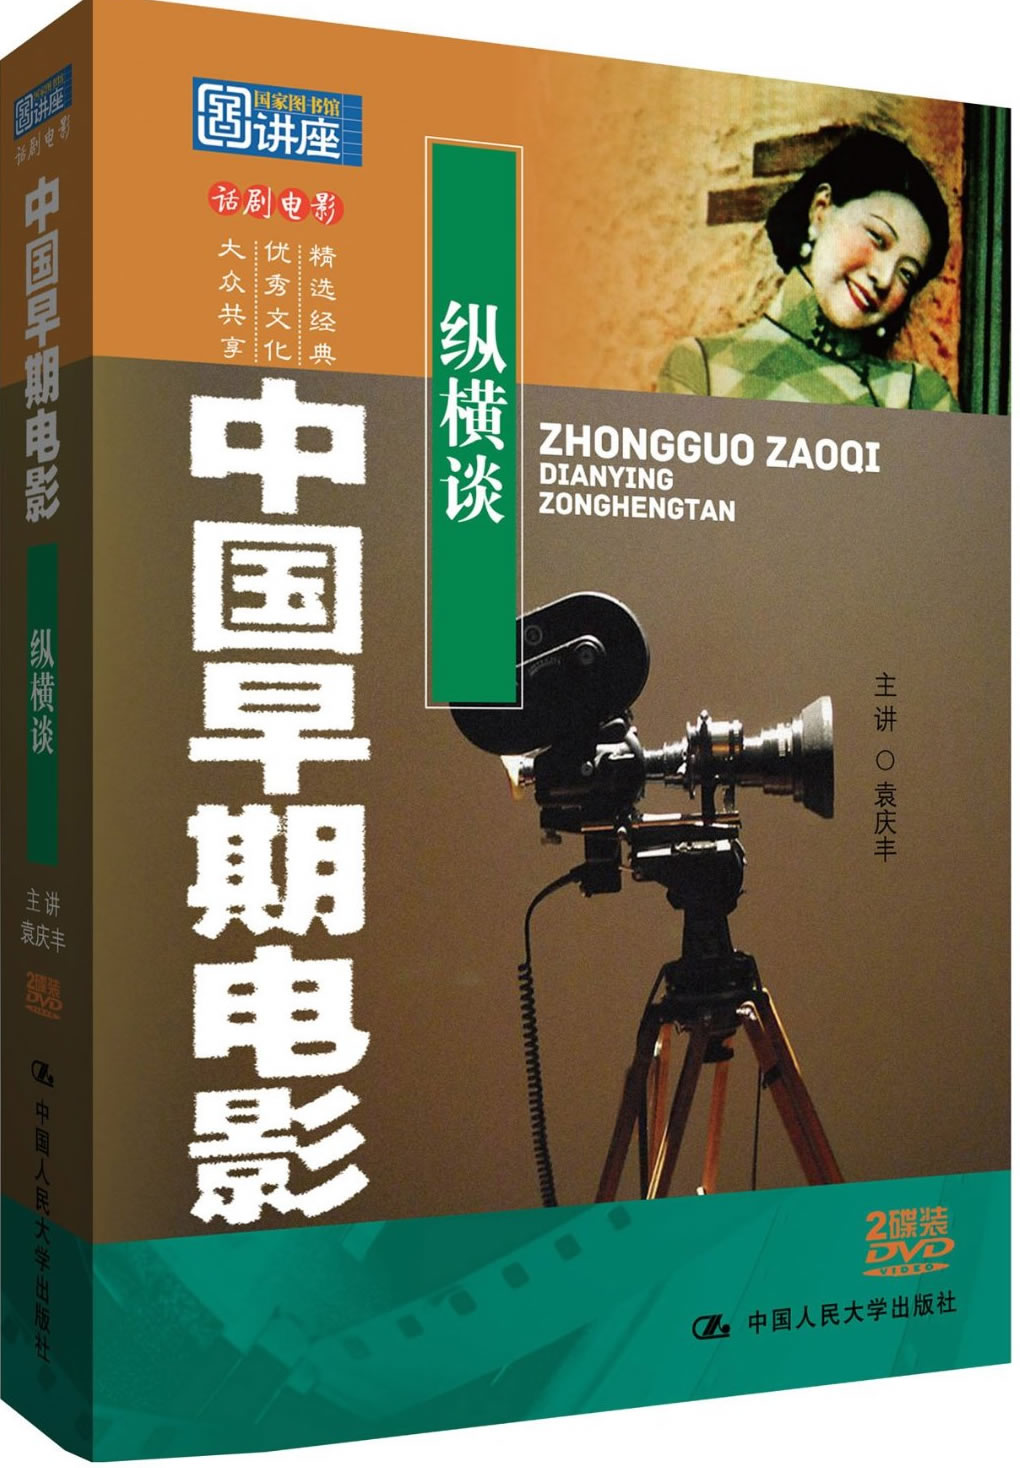 Zhongguo Zaoqi Dianying Zonghengtan (Dokumentation über den frühen chinesichen Film)<br>ISBN:978-7-88702-940-9, 9787887029409